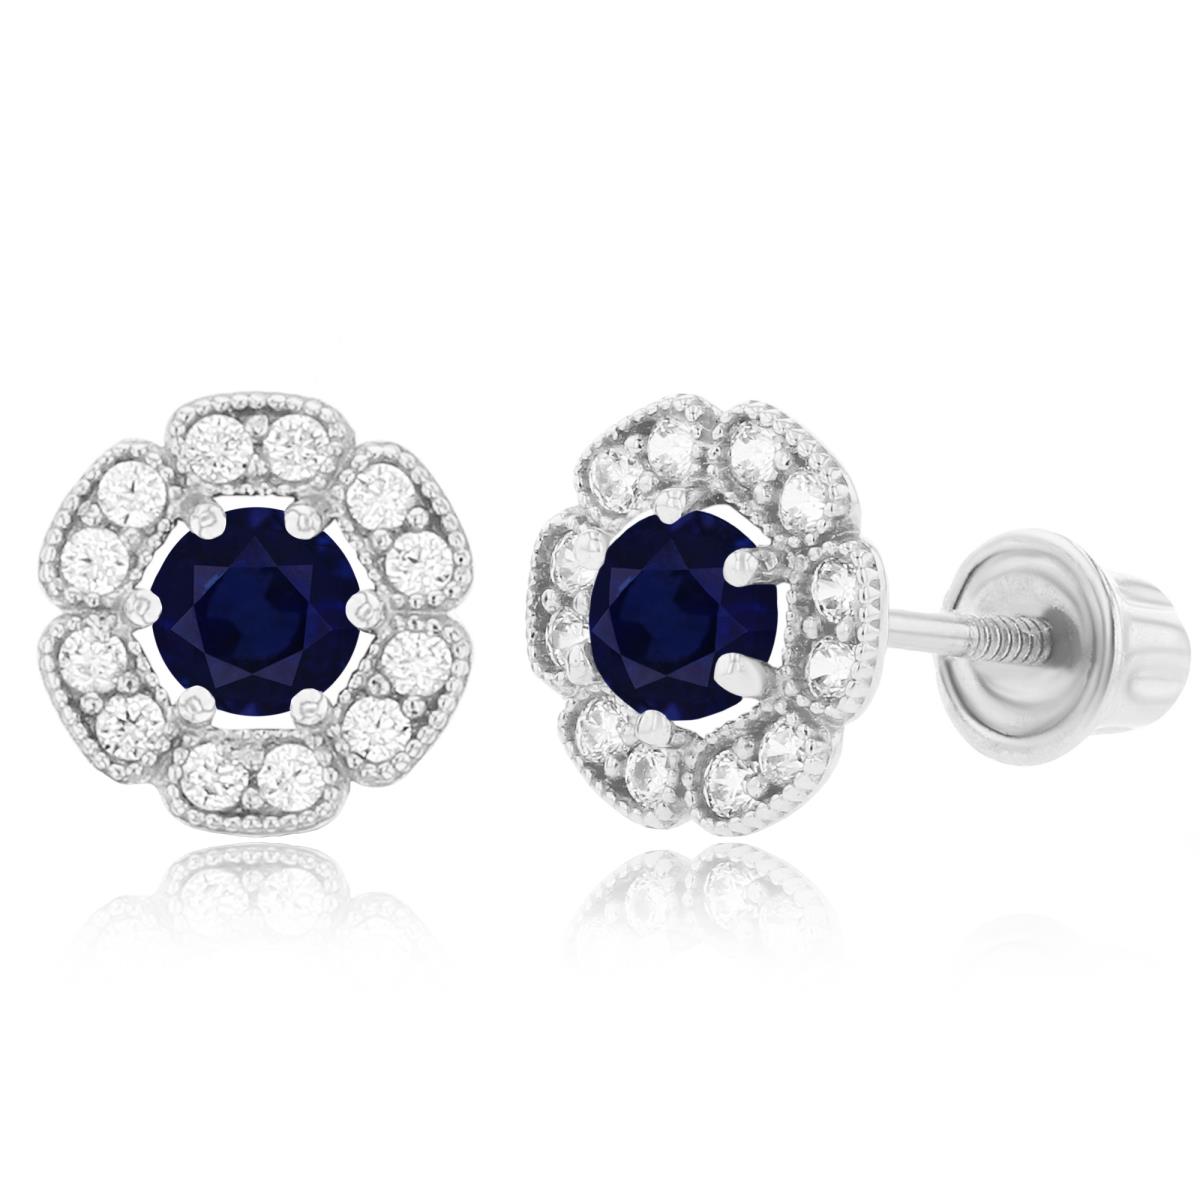 14K White Gold 3mm Sapphire & 1mm Created White Sapphire Flower Screwback Earrings